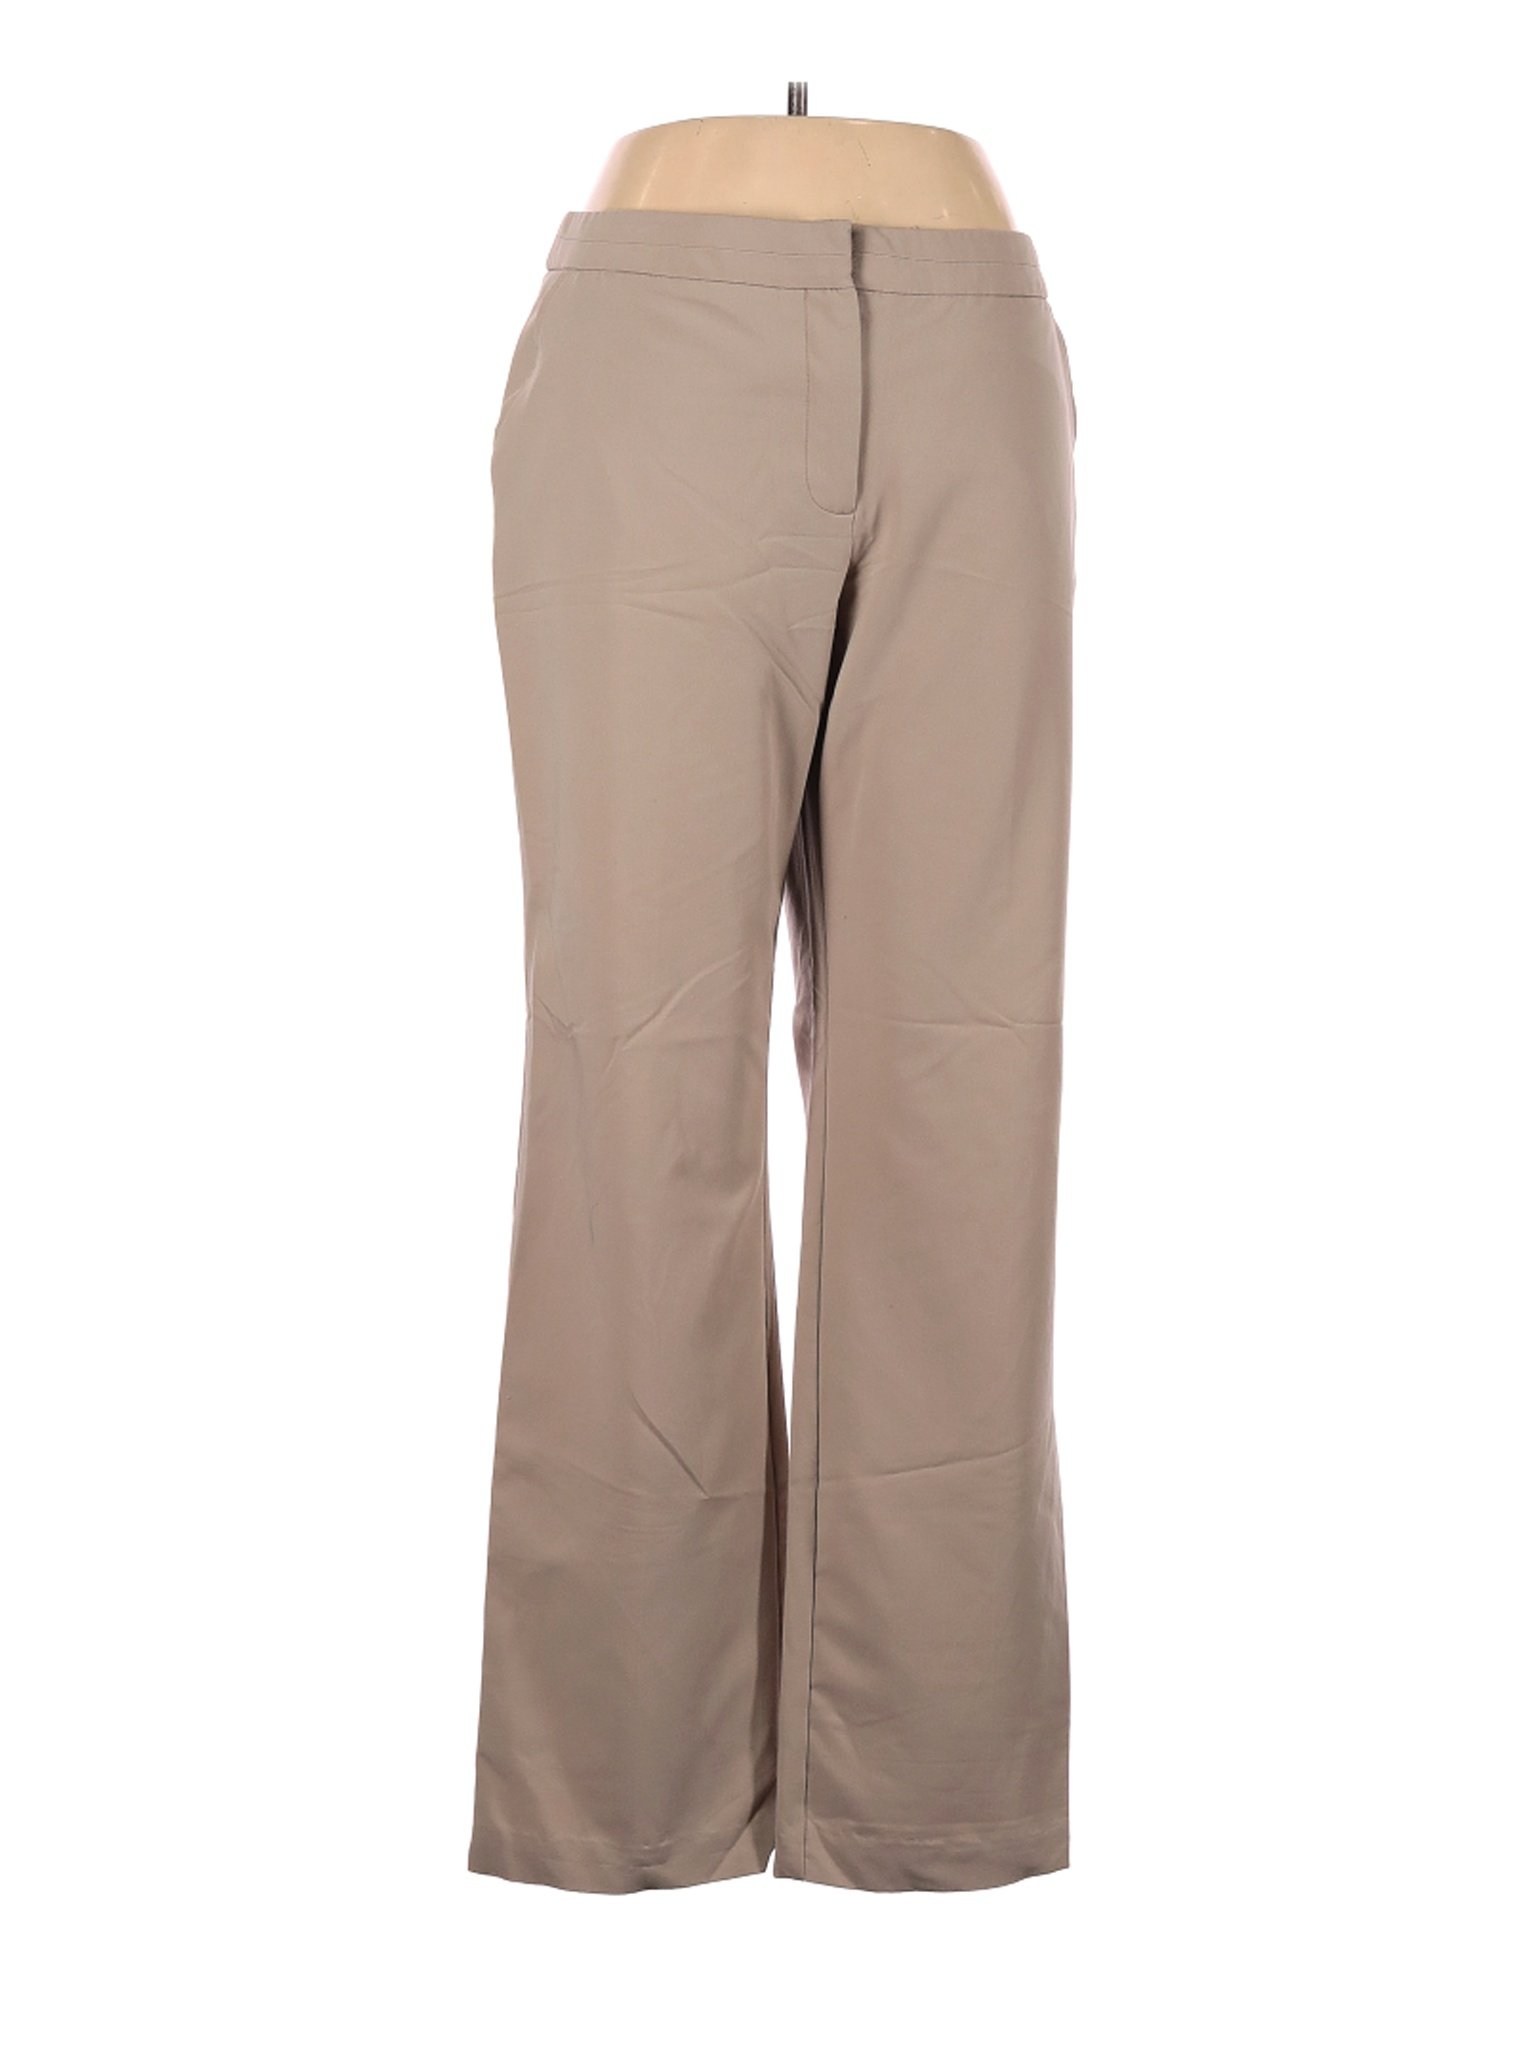 Worthington Women Brown Dress Pants 16 | eBay